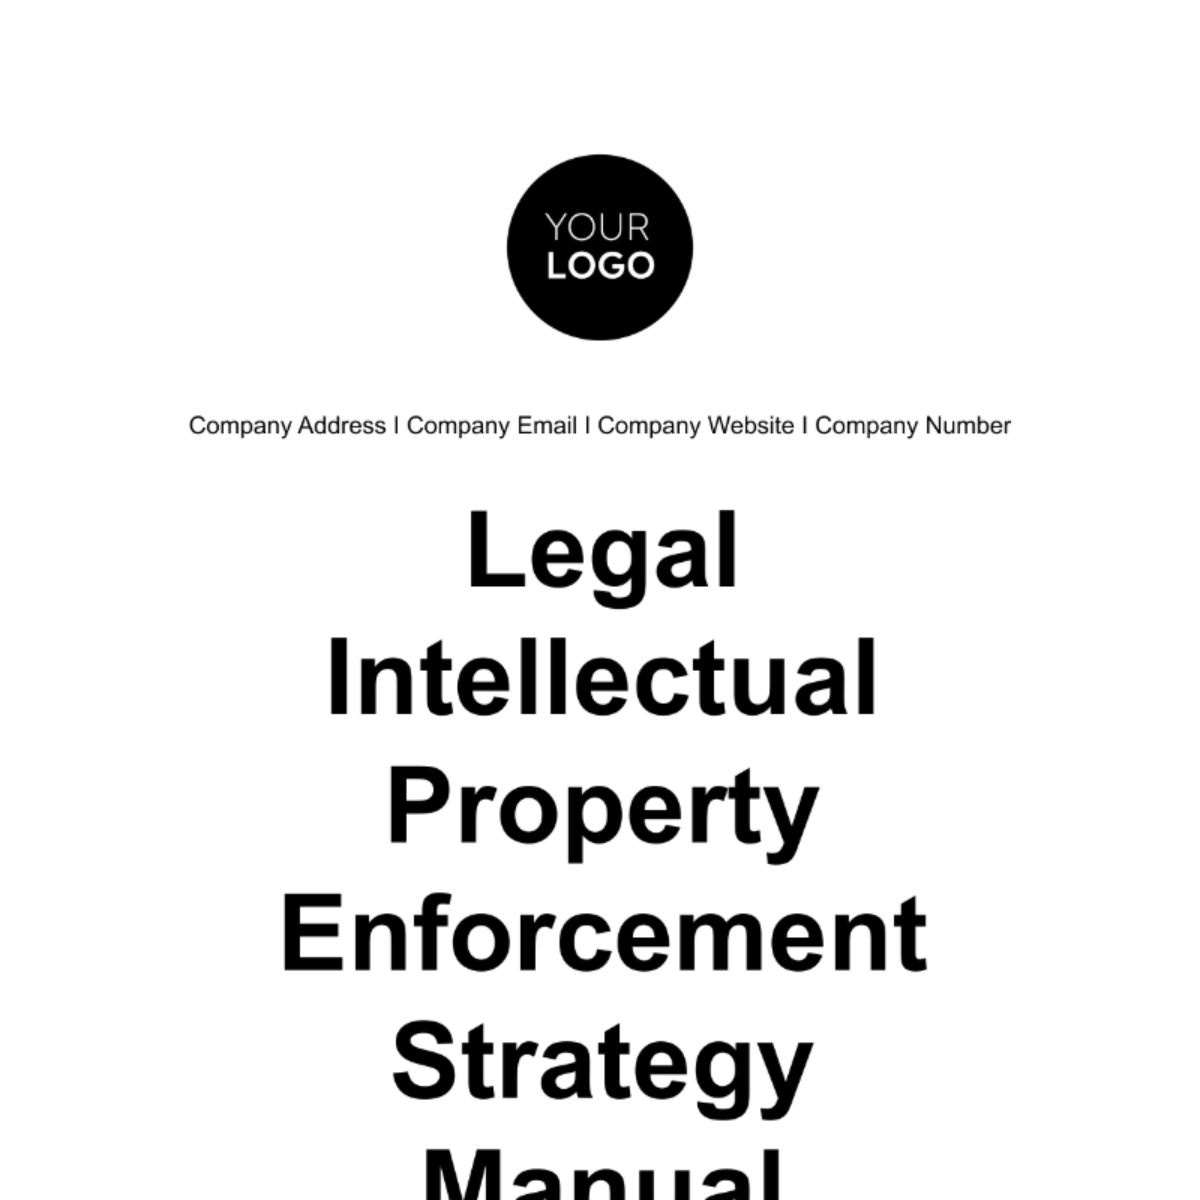 Free Legal Intellectual Property Enforcement Strategy Manual Template